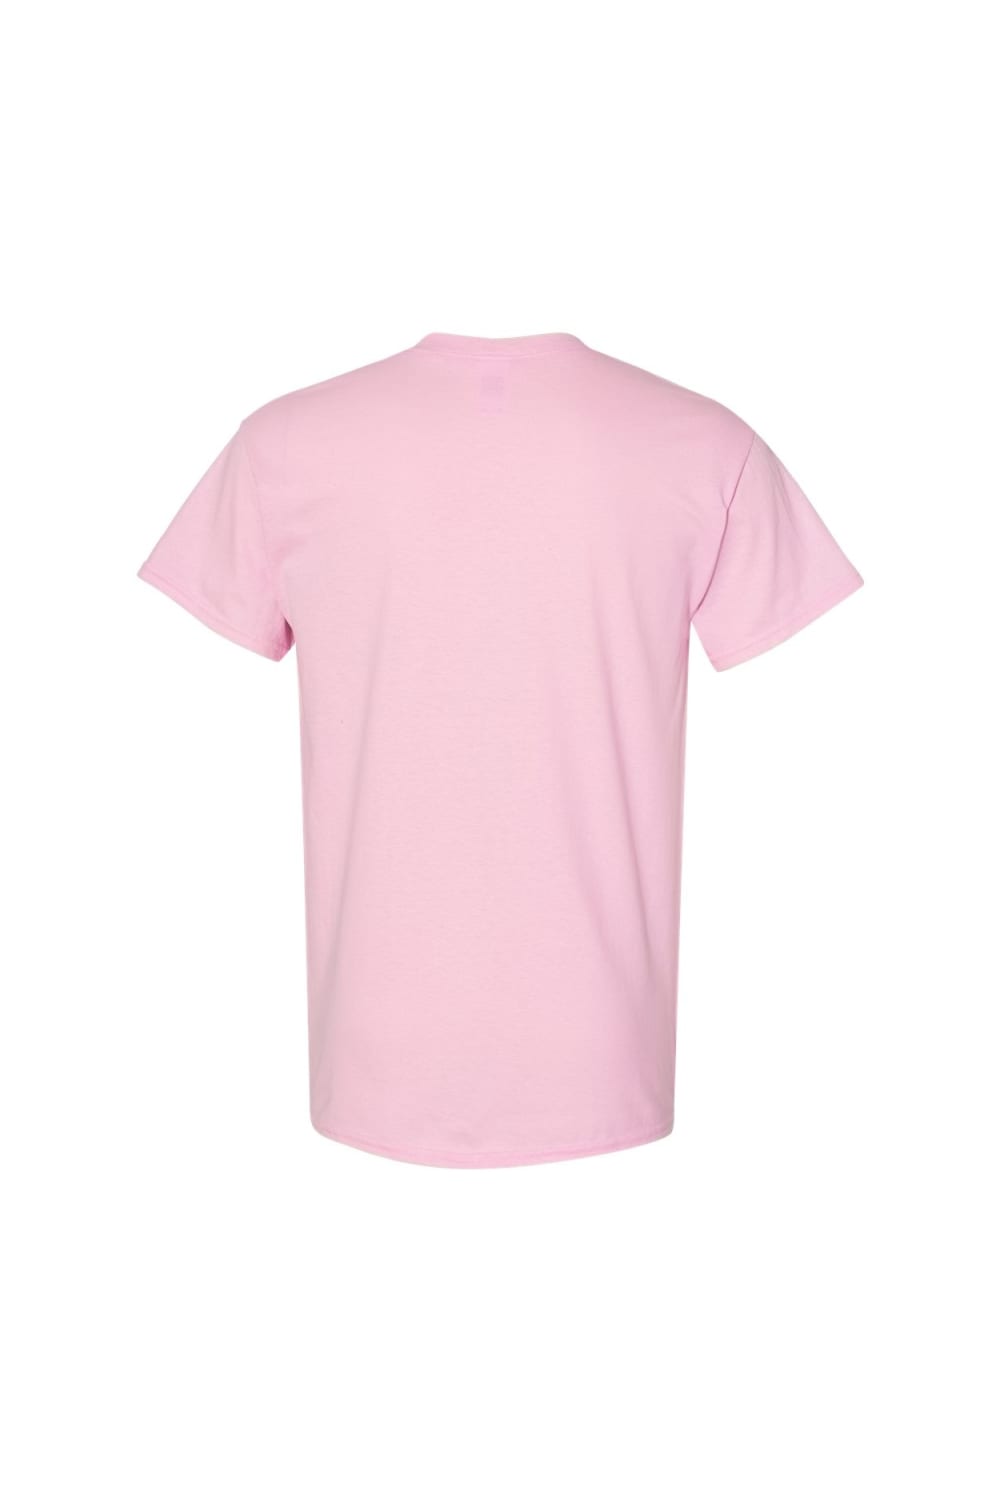 Gildan Mens Heavy Cotton Short Sleeve T-Shirt (Pack of 5) (Safety Pink)